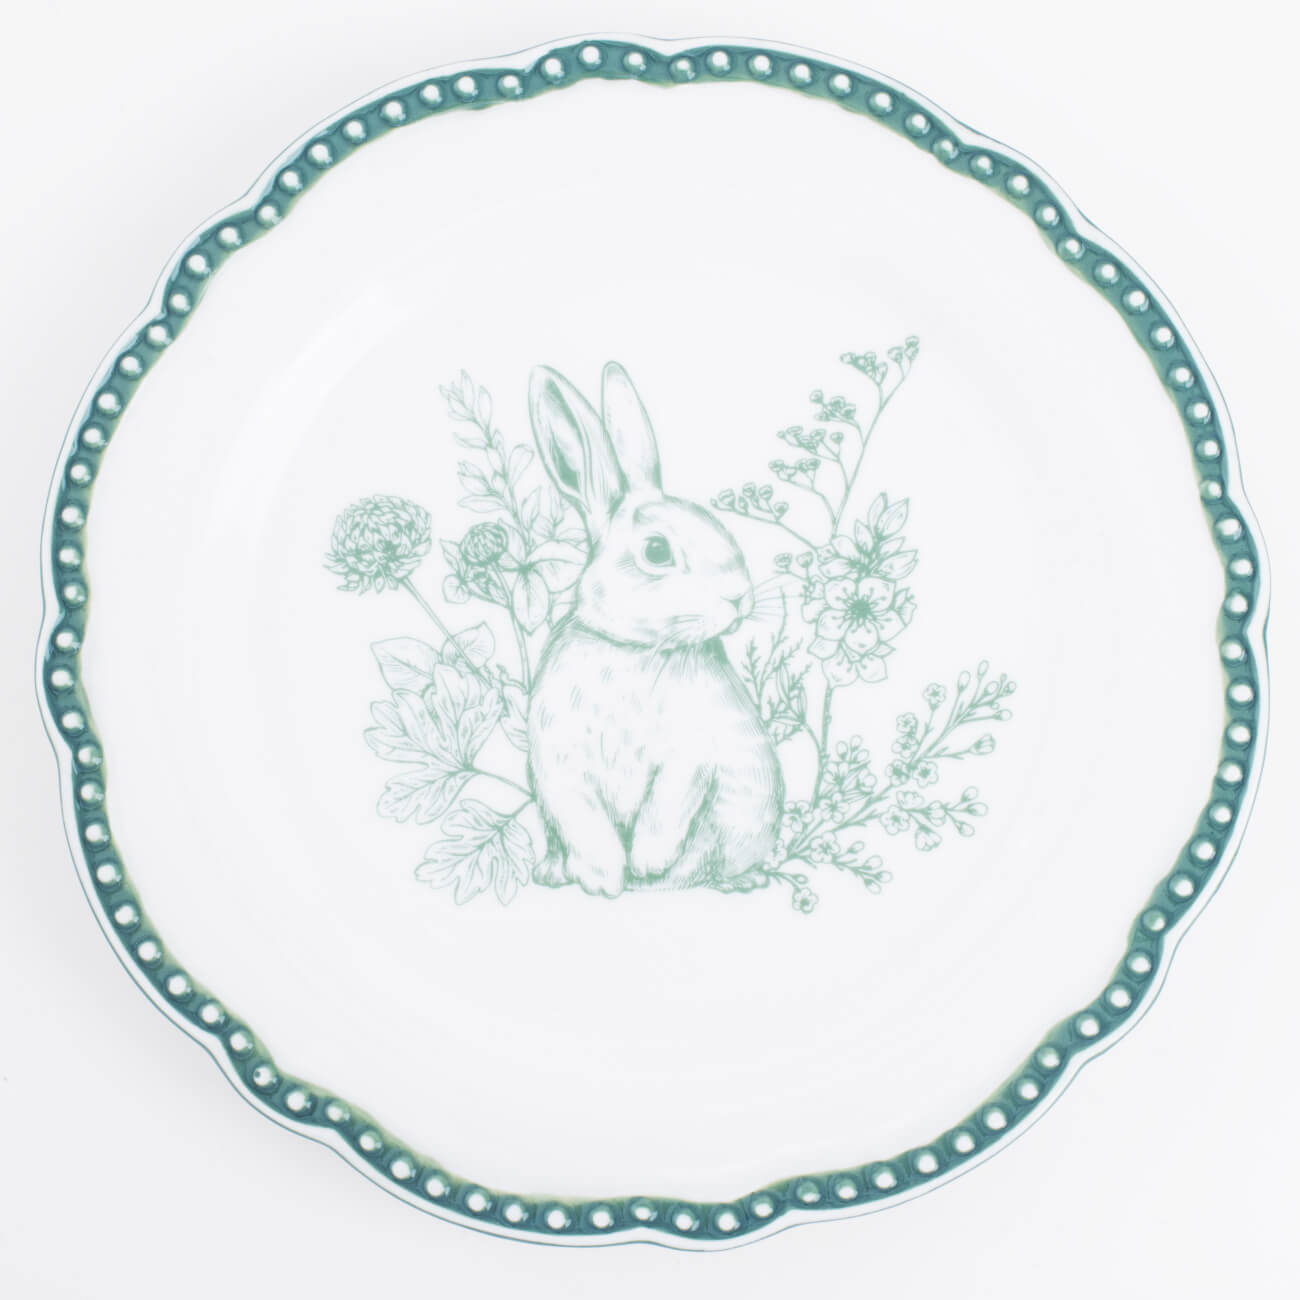 Тарелка закусочная, 21 см, керамика, бело-зеленая, Кролик в цветах, Easter blooming - фото 1